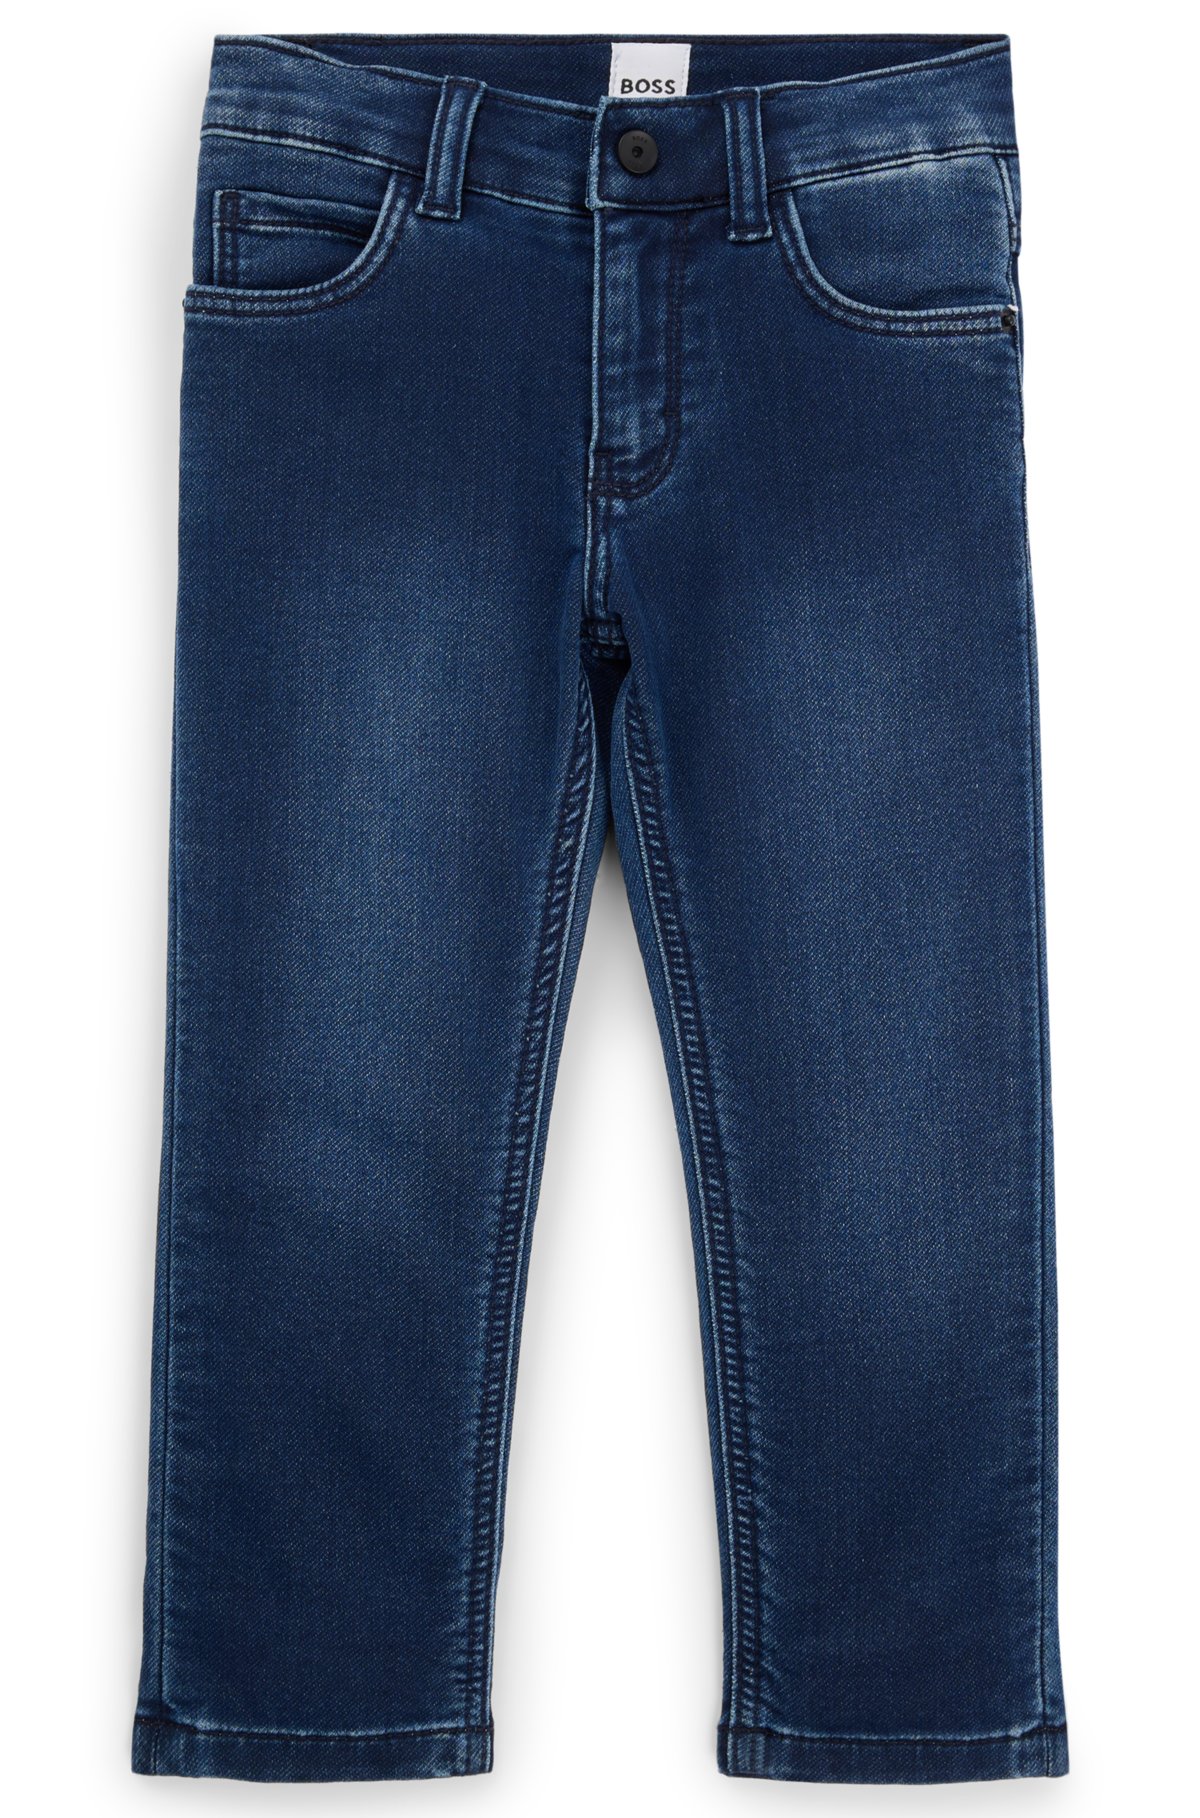 Kids' jeans in blue stretch denim, Patterned